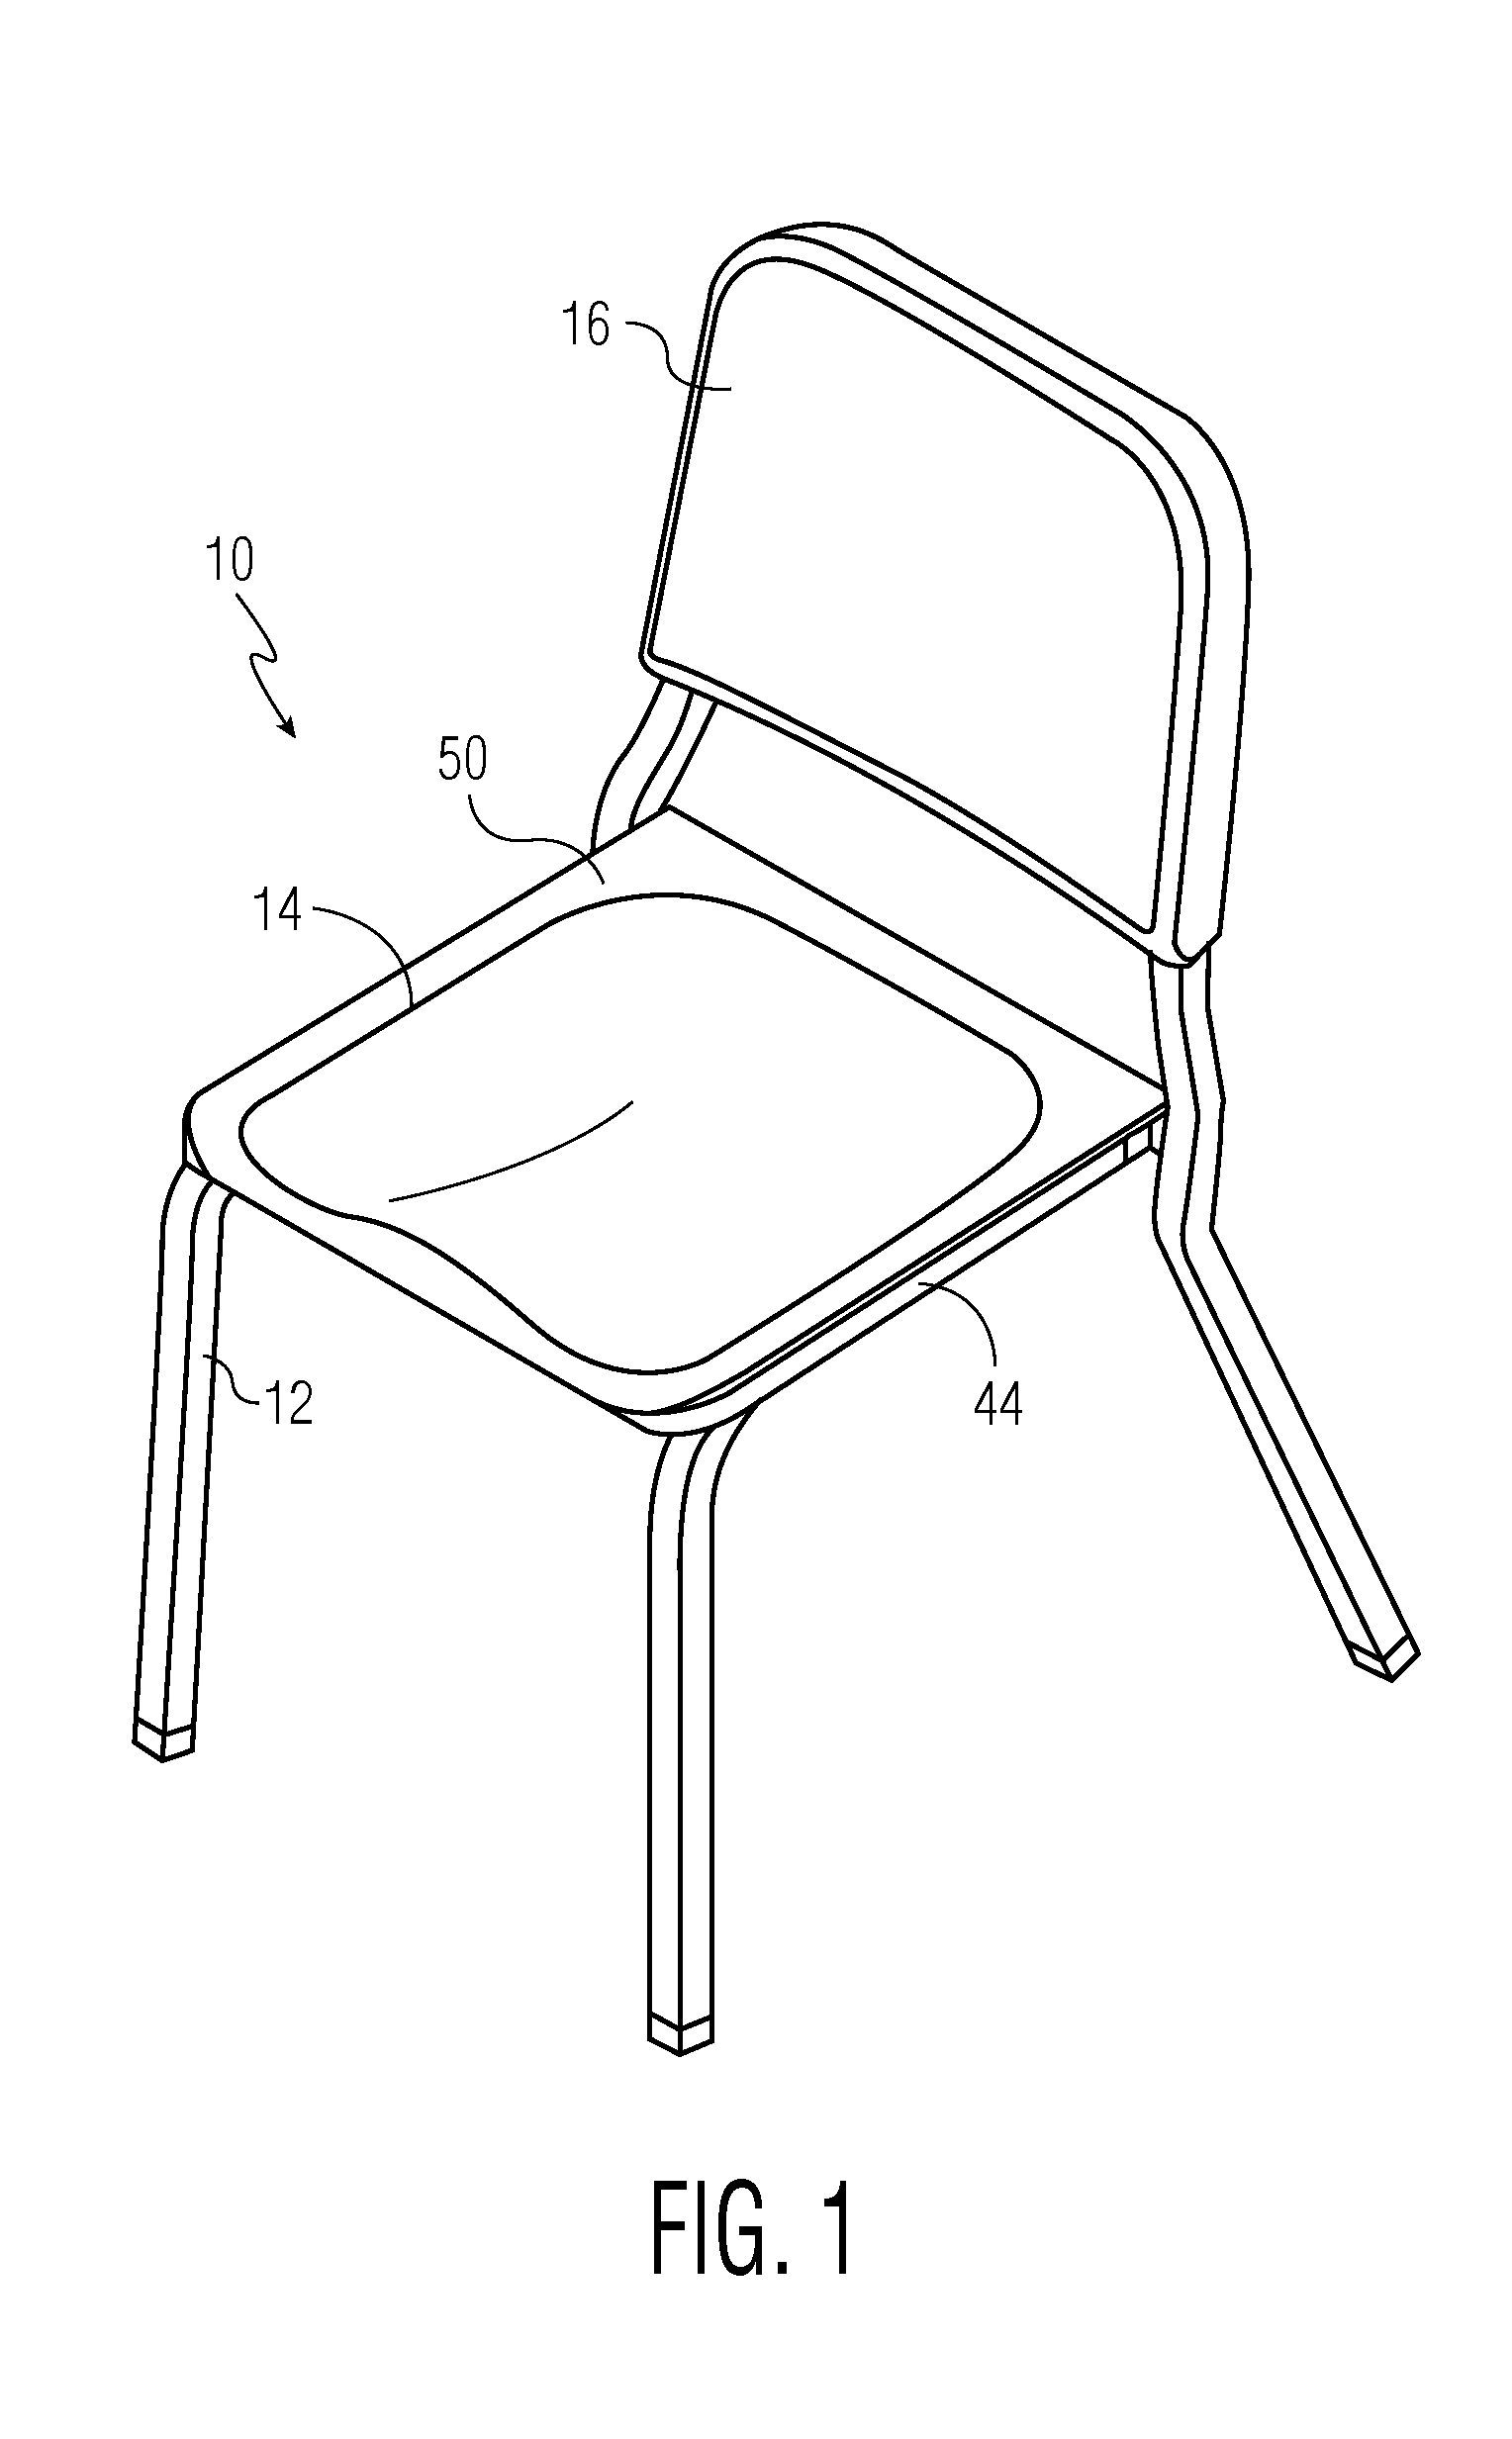 Music posture chair